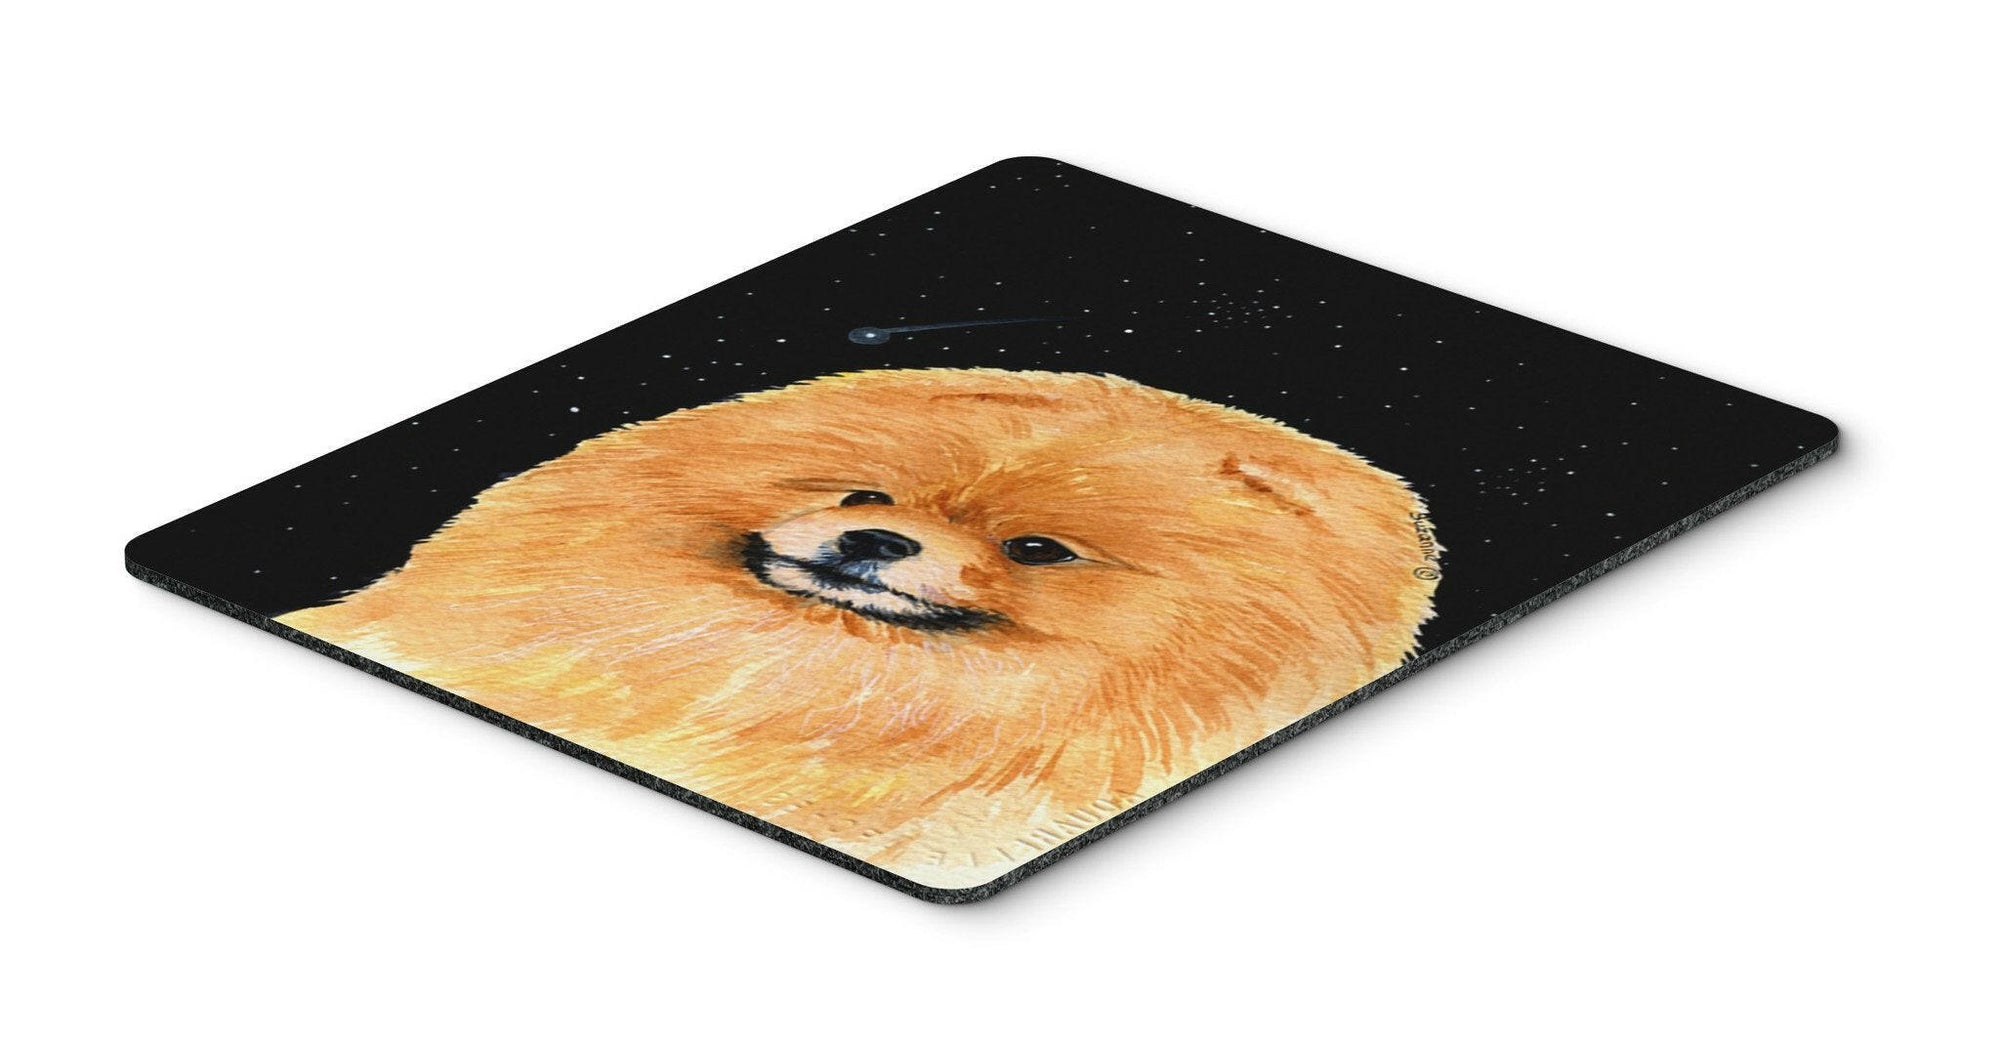 Starry Night Pomeranian Mouse Pad / Hot Pad / Trivet by Caroline's Treasures